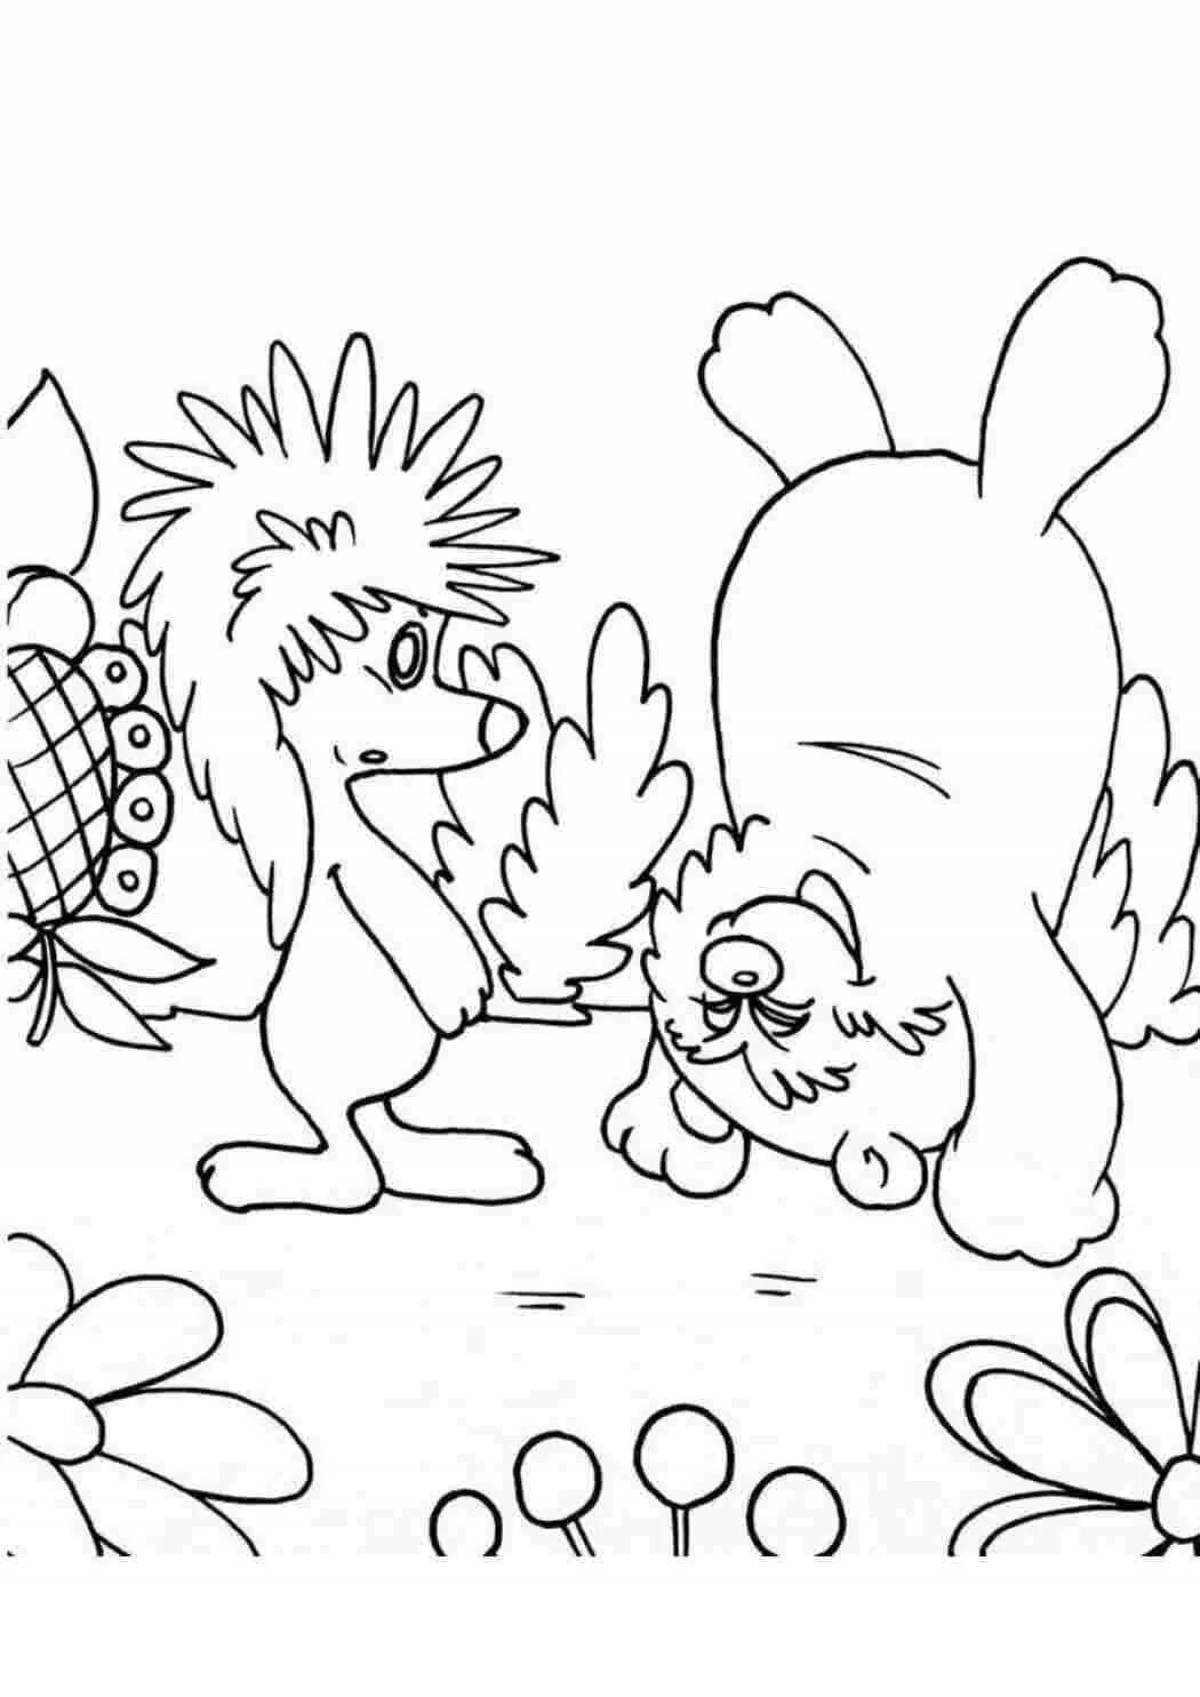 Luminous hedgehog and teddy bear coloring book